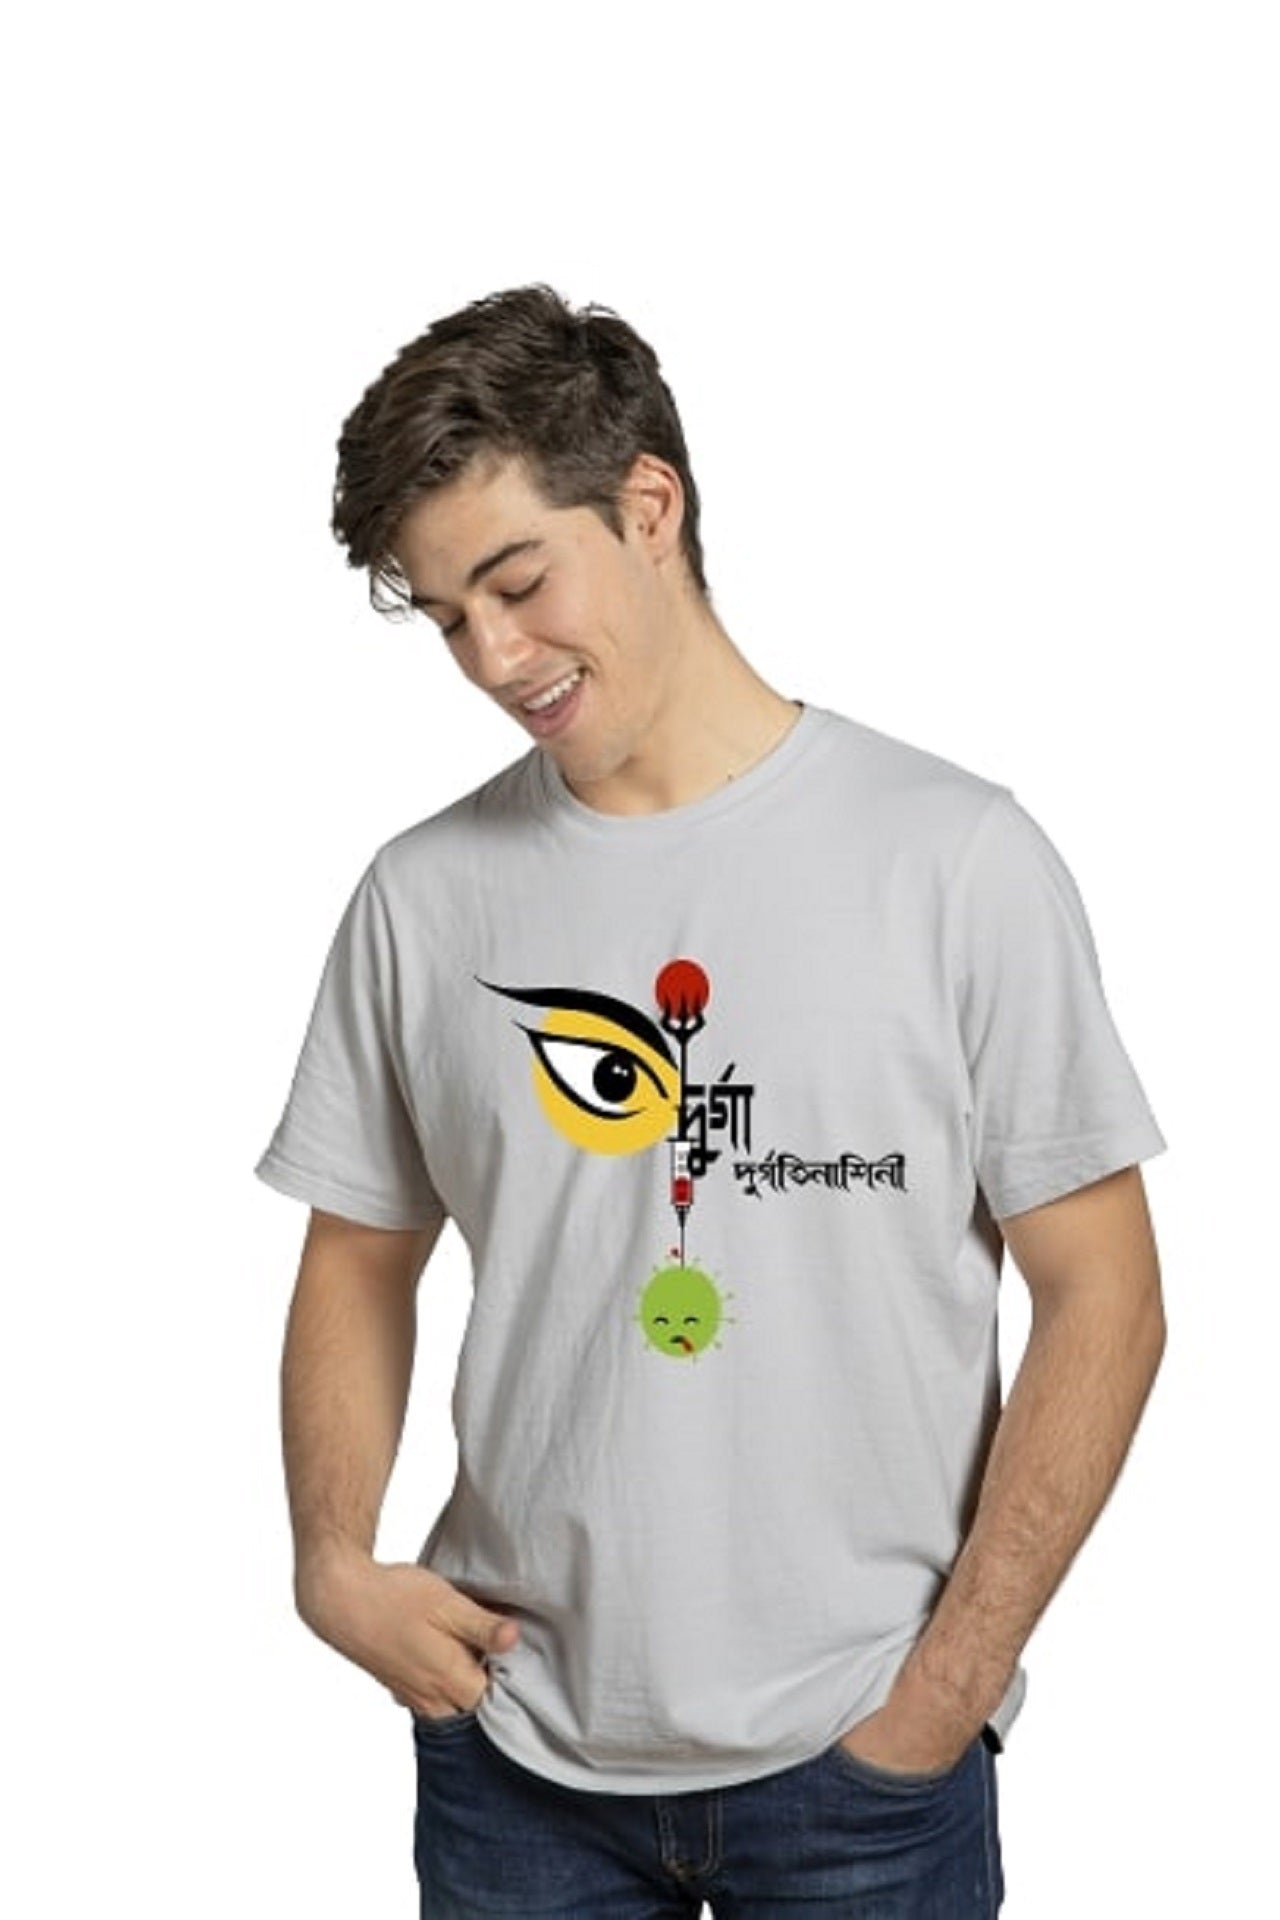 Best Printed T Shirt Online